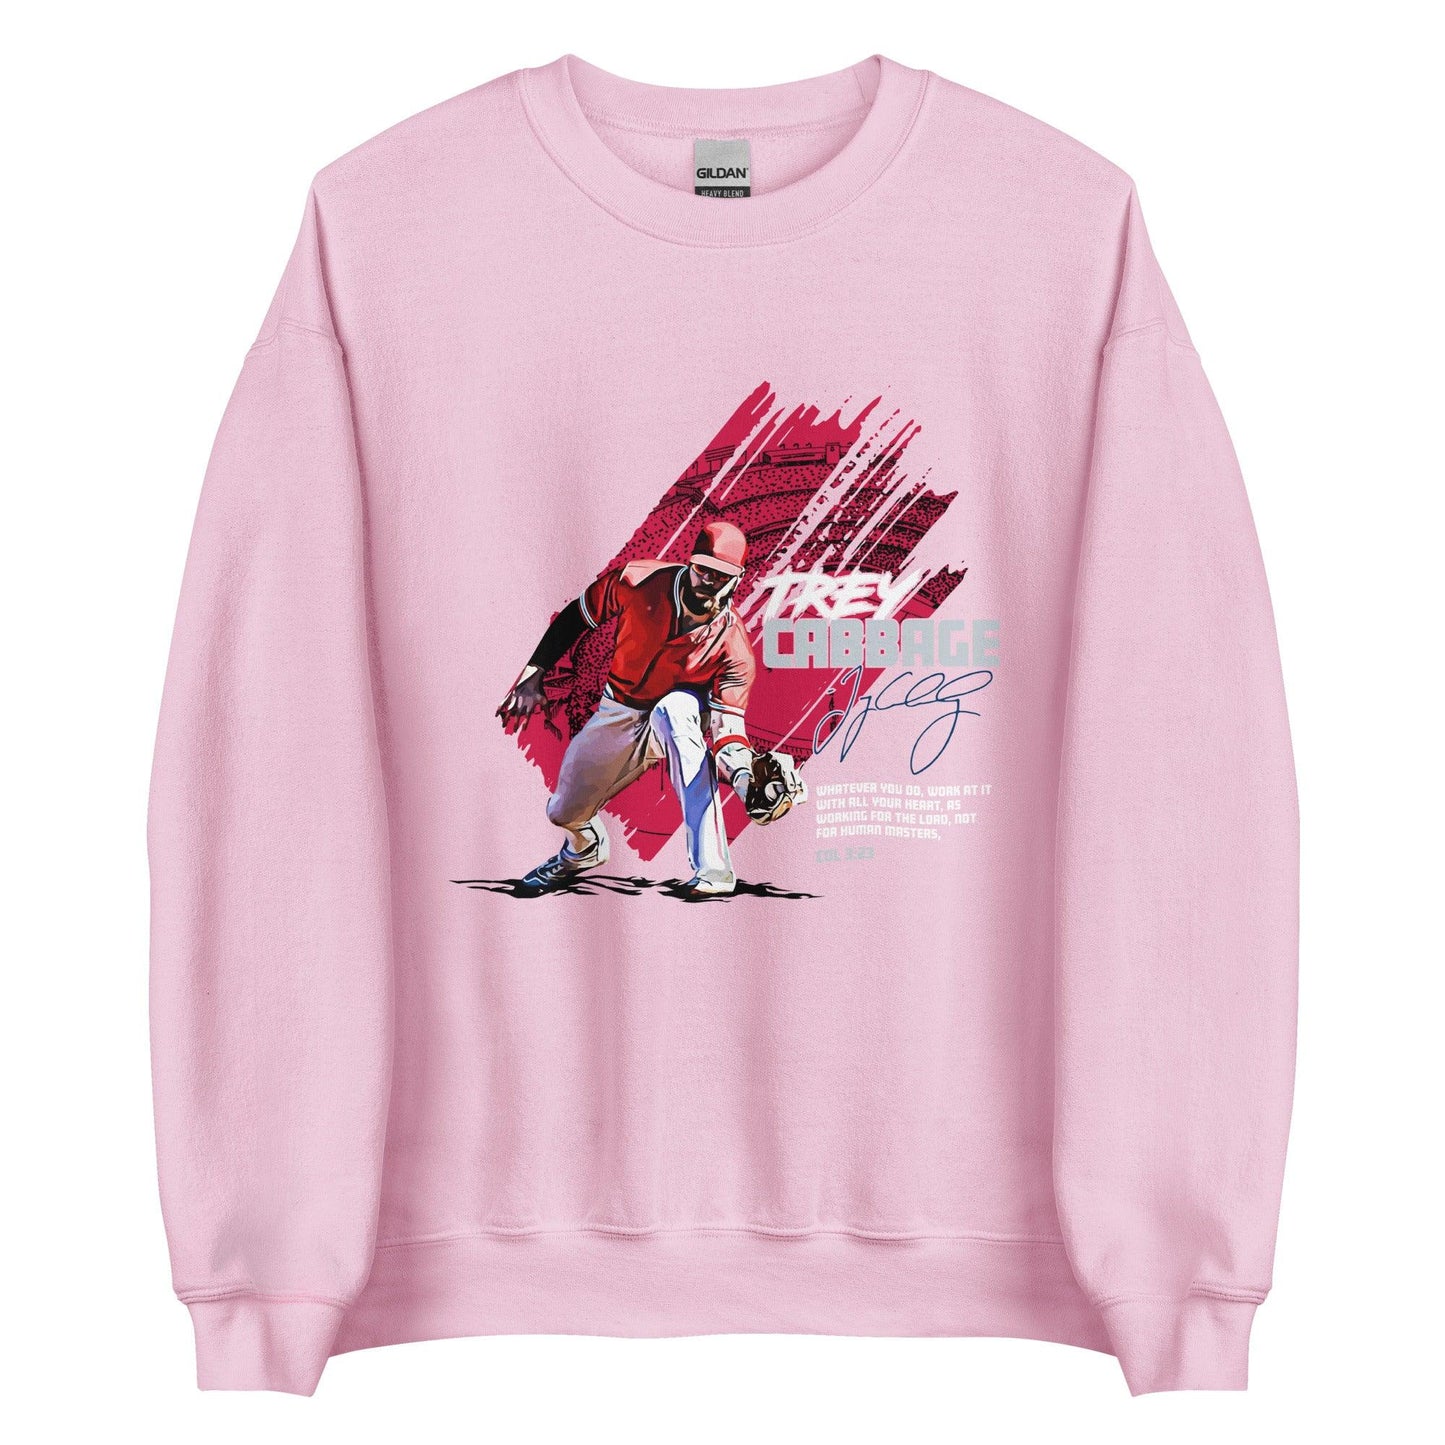 Trey Cabbage “Signature” Sweatshirt - Fan Arch